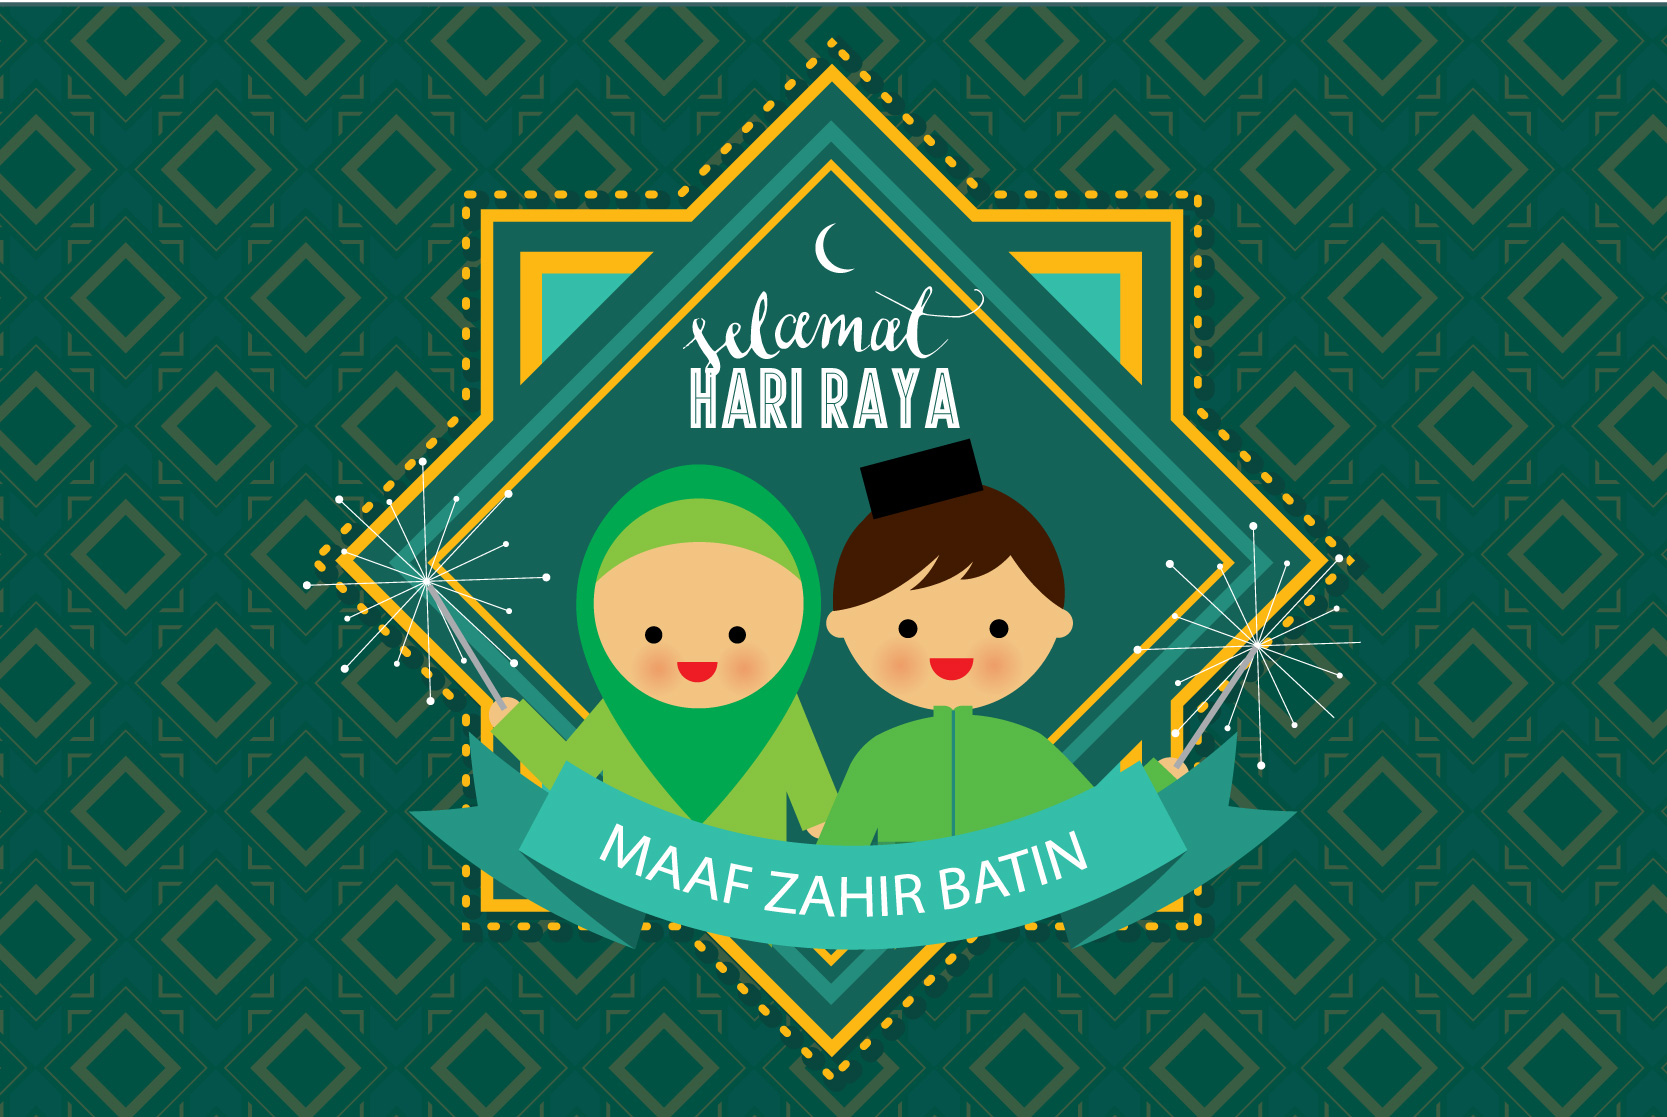 Hari raya greeting vector ~ Illustrations on Creative Market